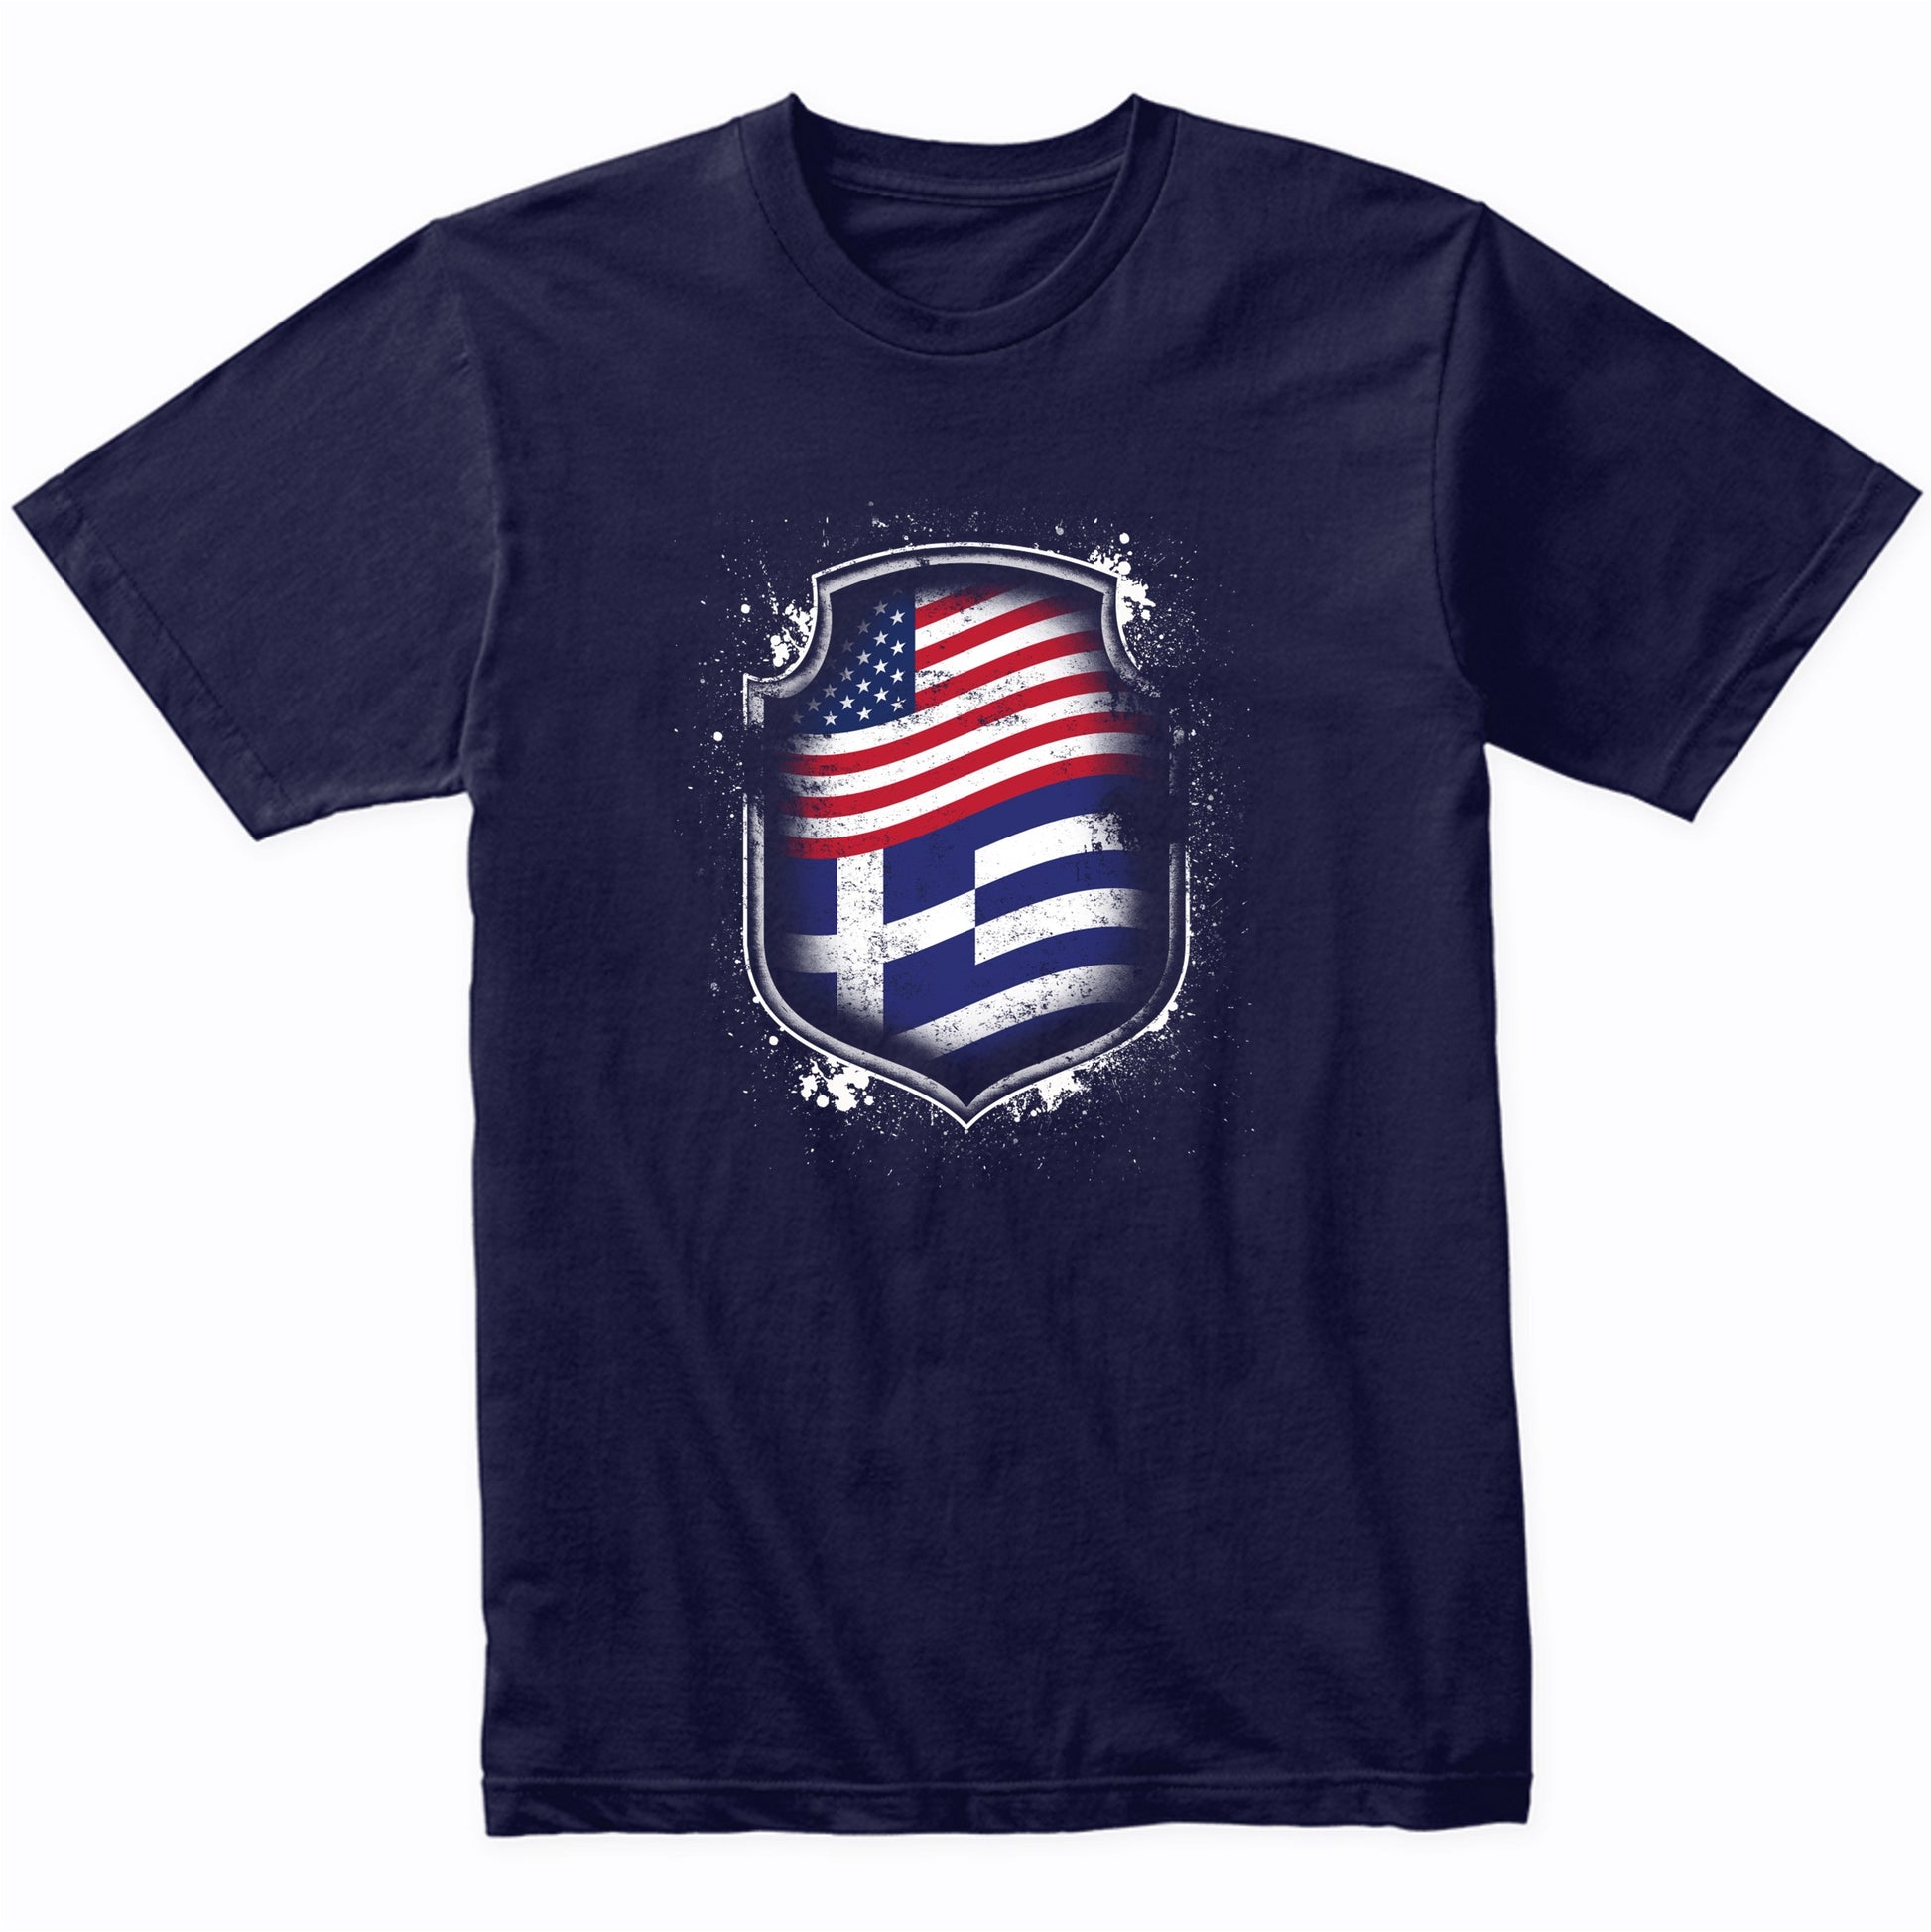 Greek American Shirt Flags Of Greece and America T-Shirt